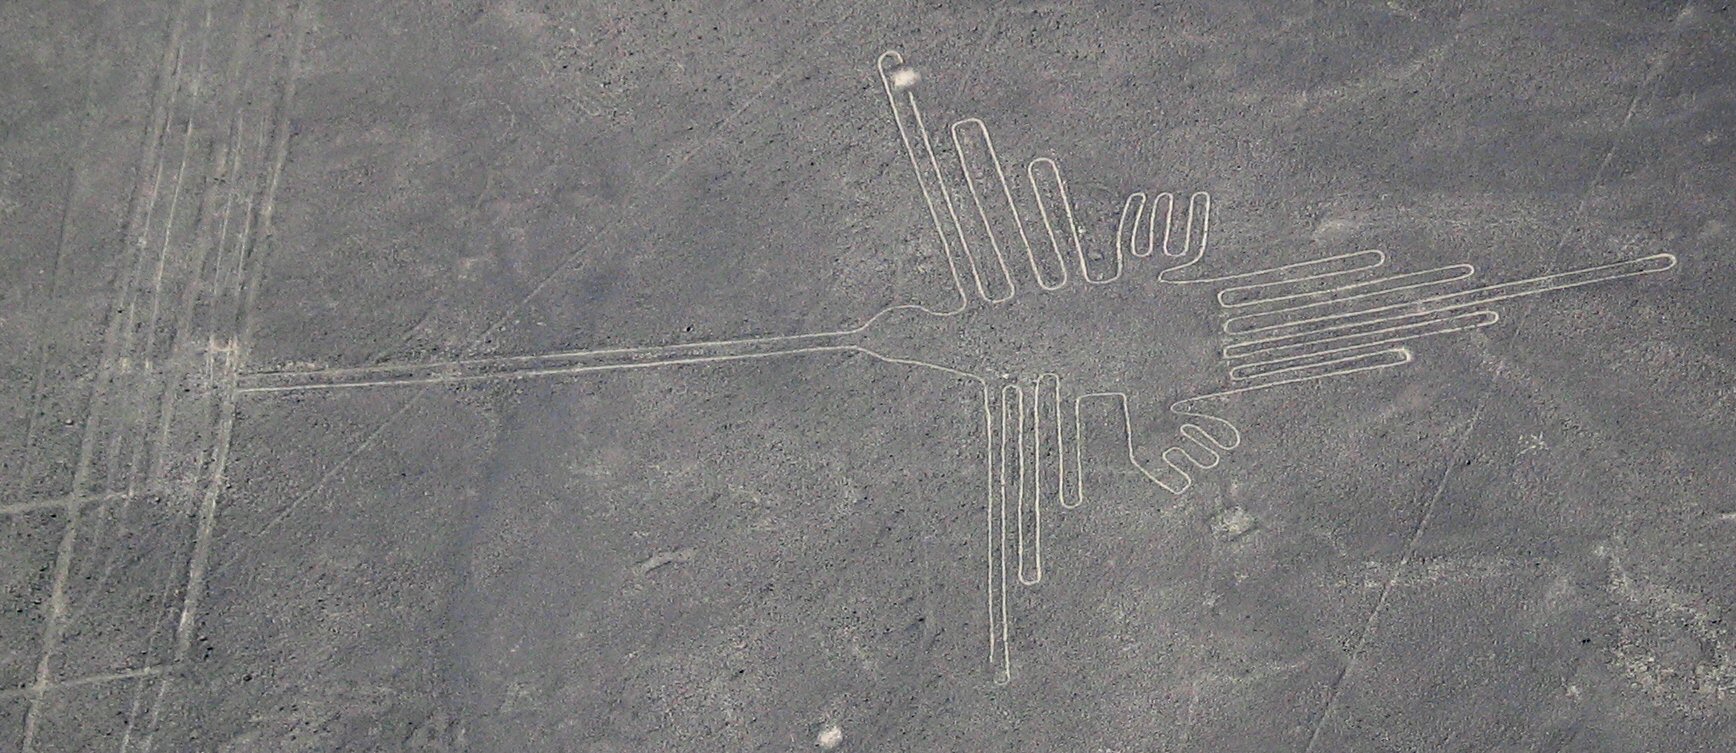 Image result for nazca lines